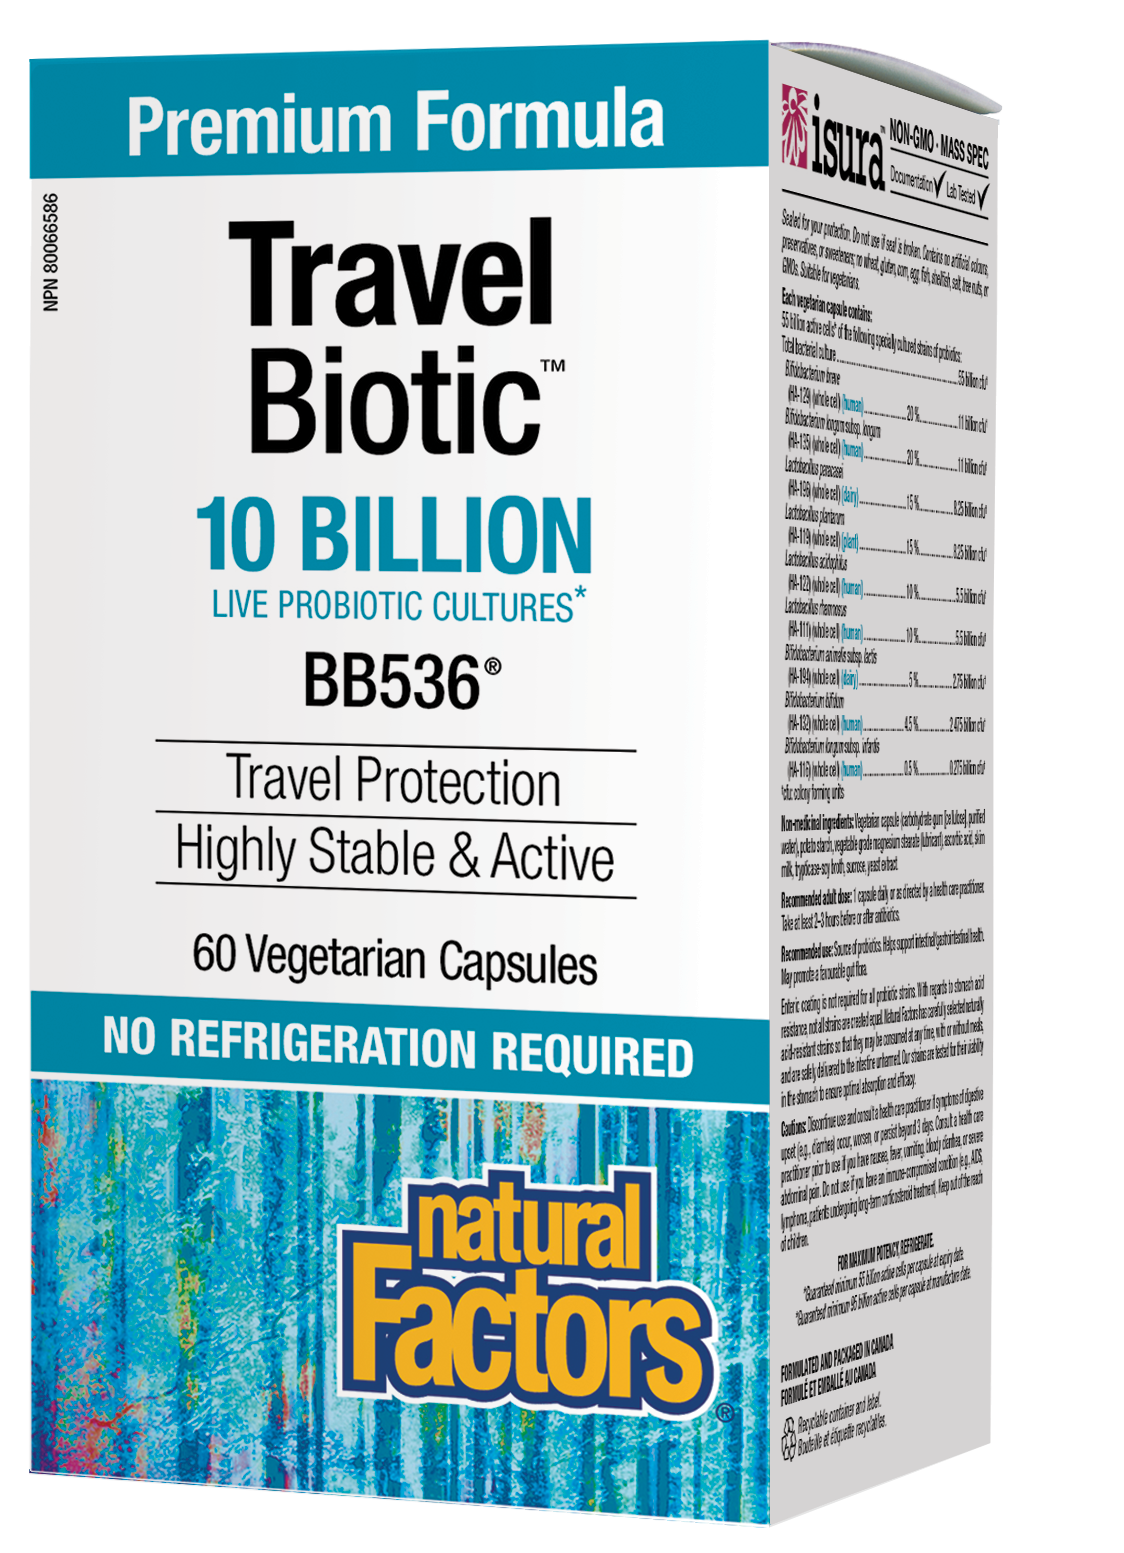 Natural Factors: Travel Biotic BB536 10 Billion Live Probiotic Cultures 60 Capsules